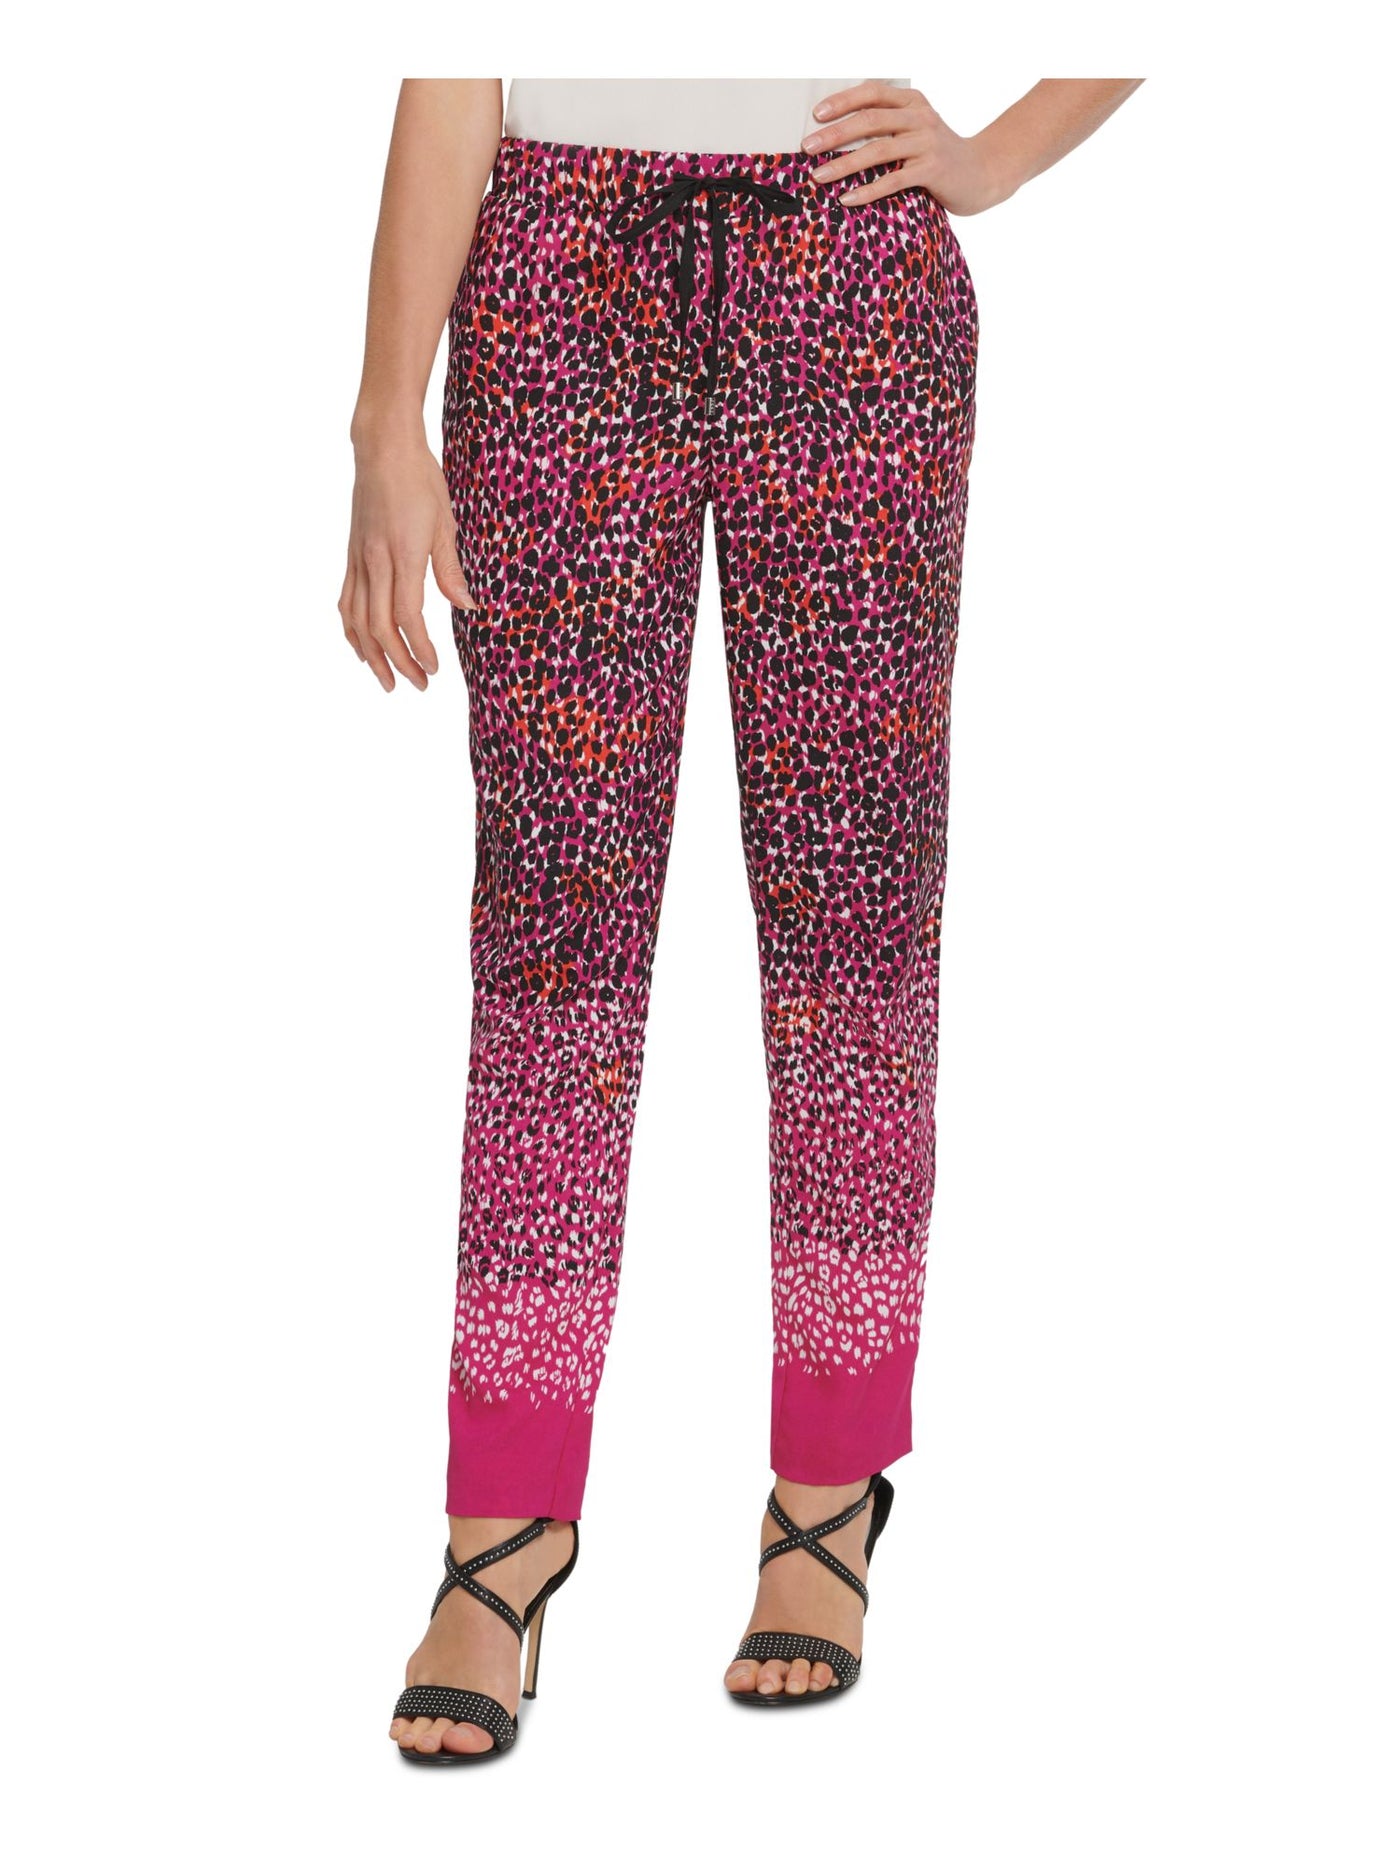 DKNY Womens Pink Animal Print Straight leg Pants L